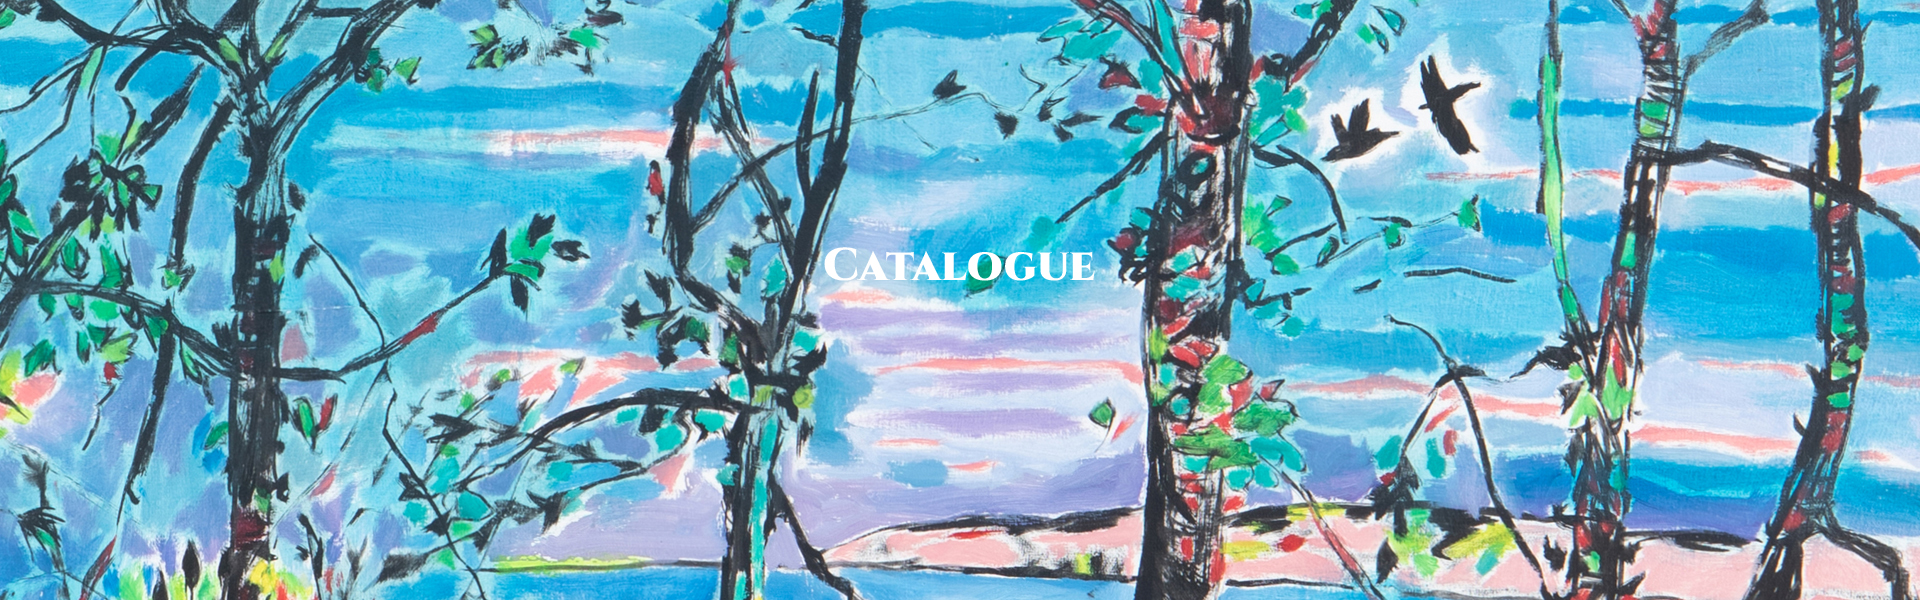 Catalogue header